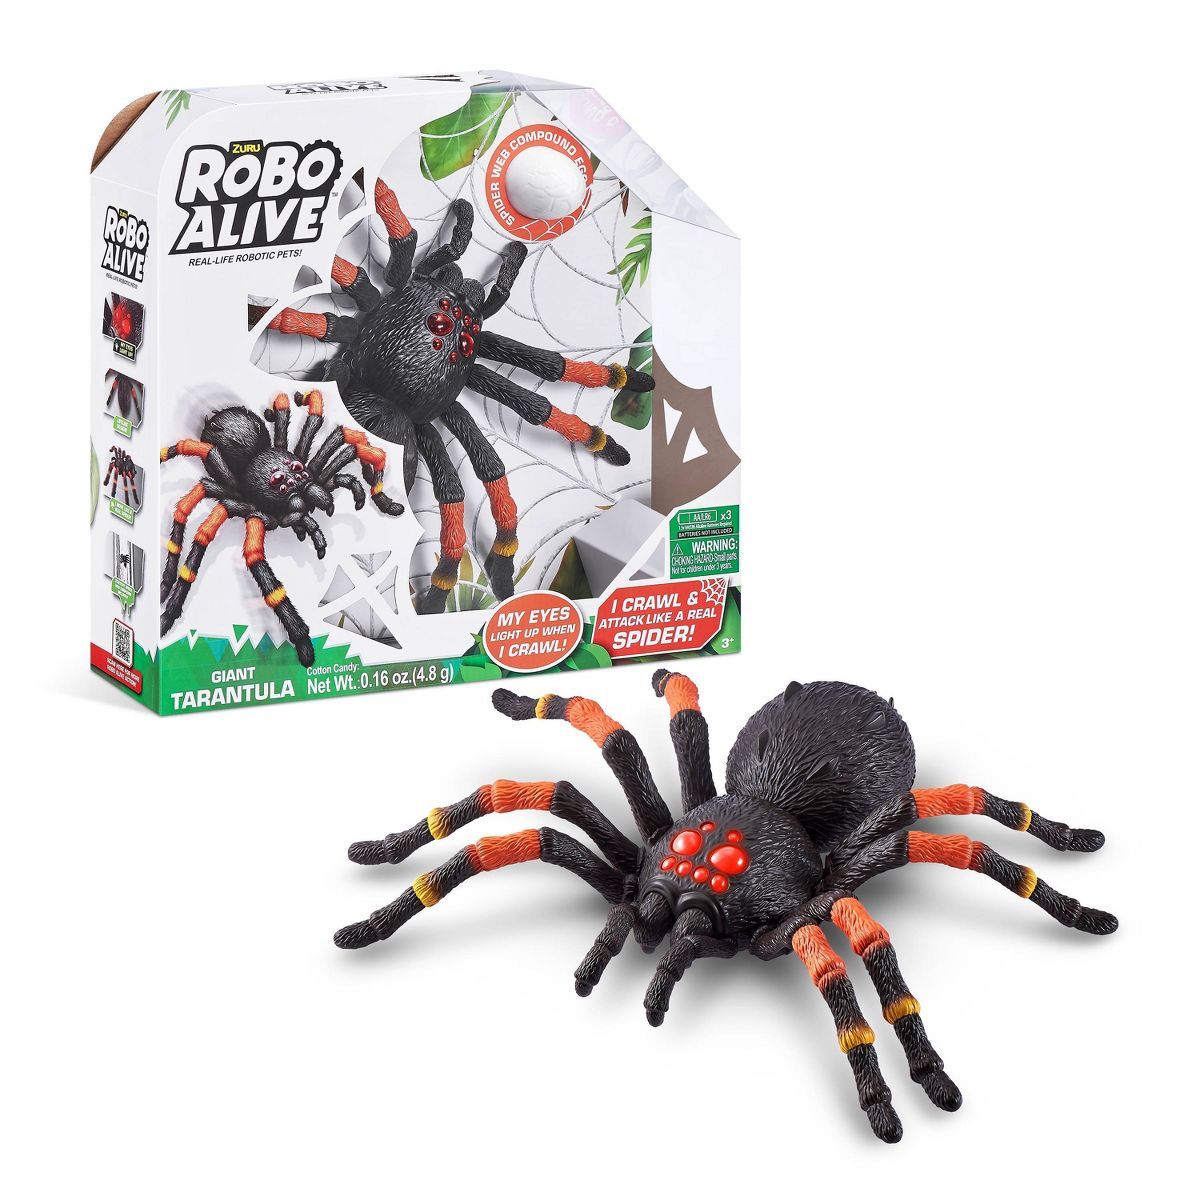 Robo Alive 15" Giant Tarantula Spider Robotic Toy by ZURU | Target